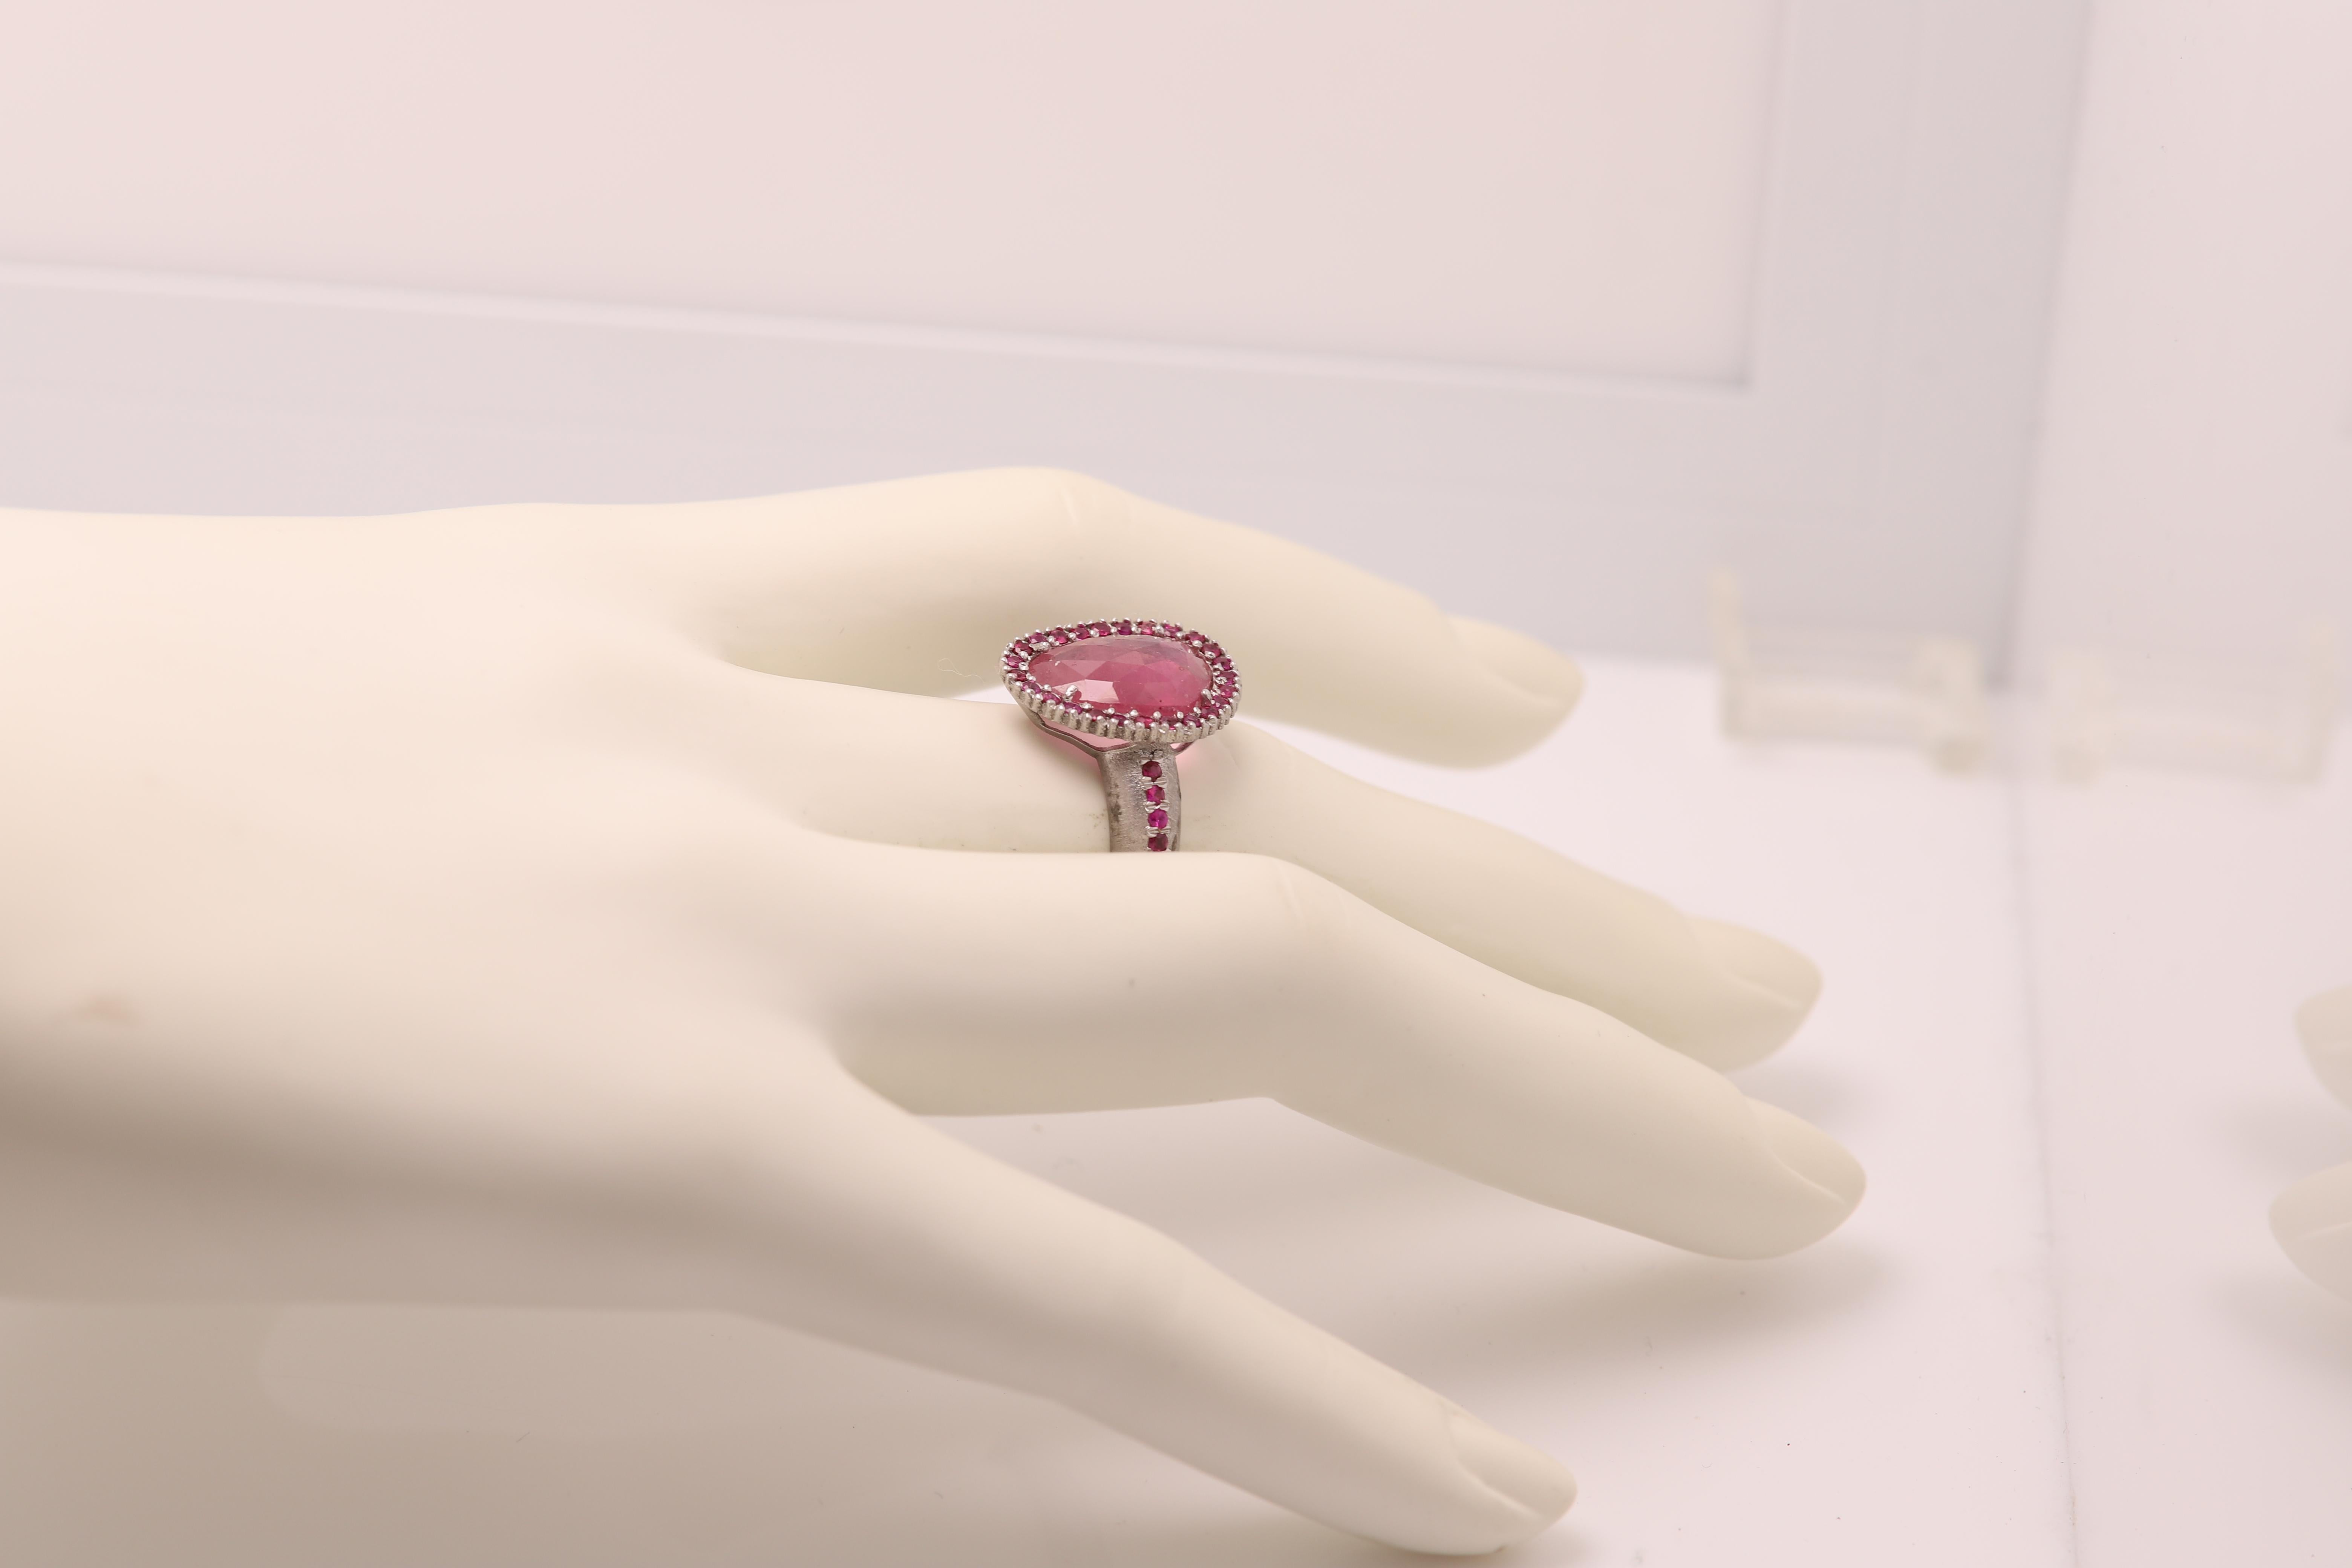 Women's Pink Tourmaline Sliced Gem Ring 14 Karat Gold Vintage Pink Tourmaline Ring For Sale